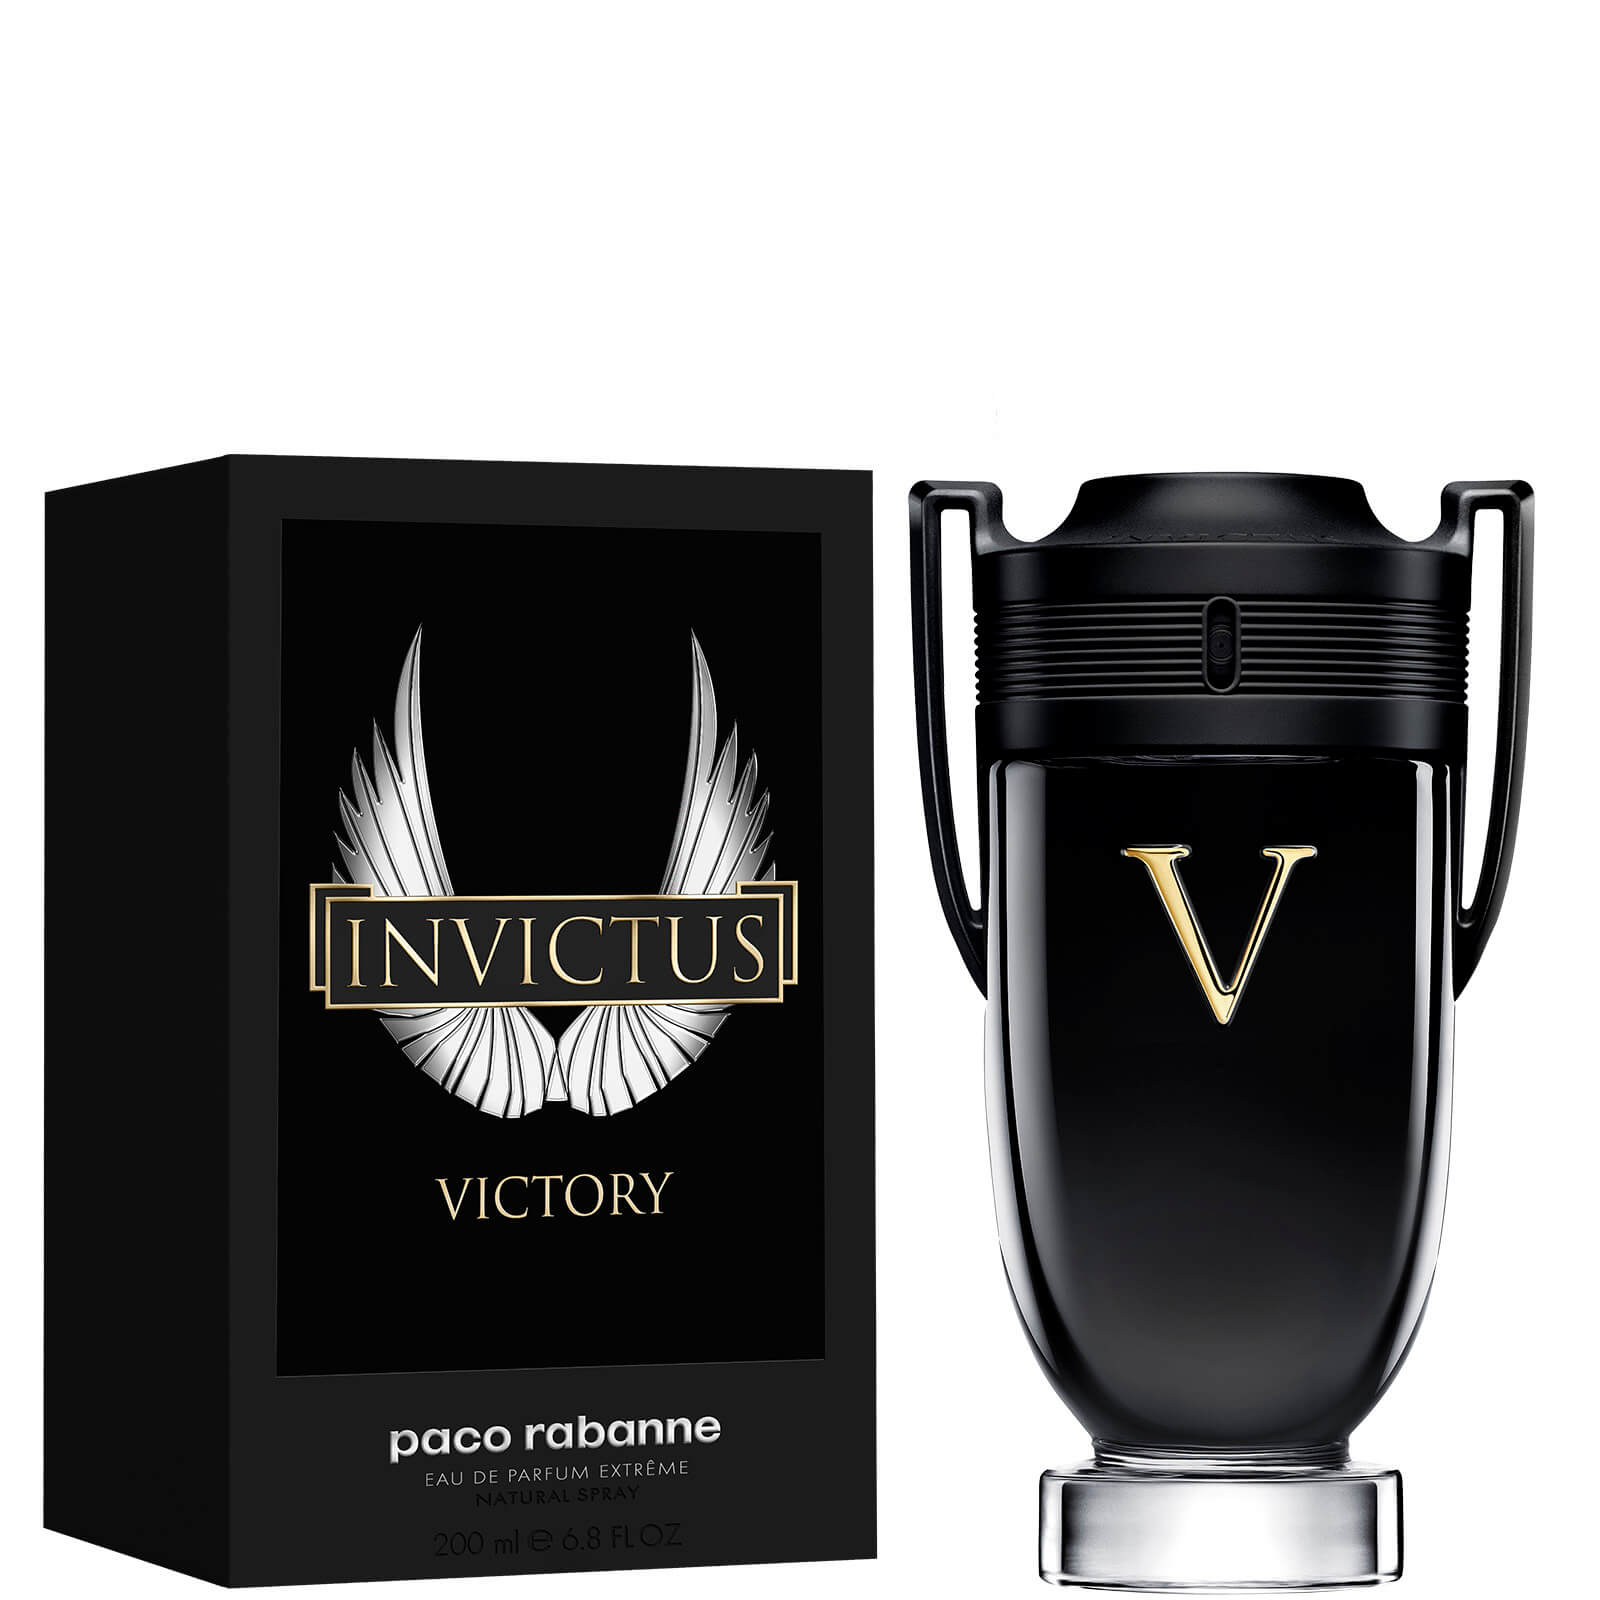 Купить Paco Rabanne Invictus Victory Extreme Eau de Parfum 200ml